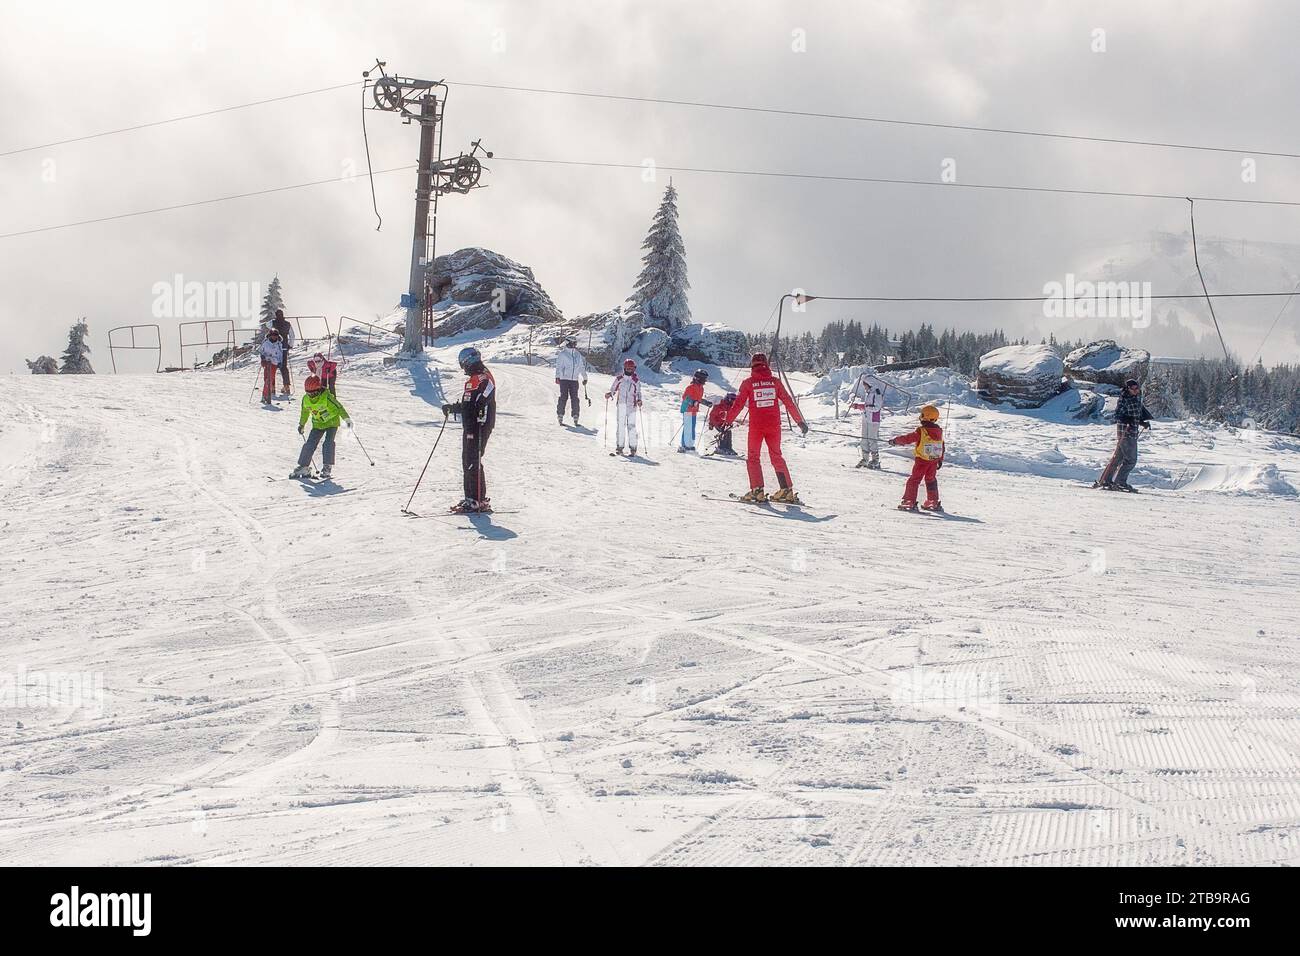 Kopaonik, Serbia - January 22, 2016: Ski resort Kopaonik, Serbia, ski lift, ski slope, people skiing down from the drug lift Stock Photo